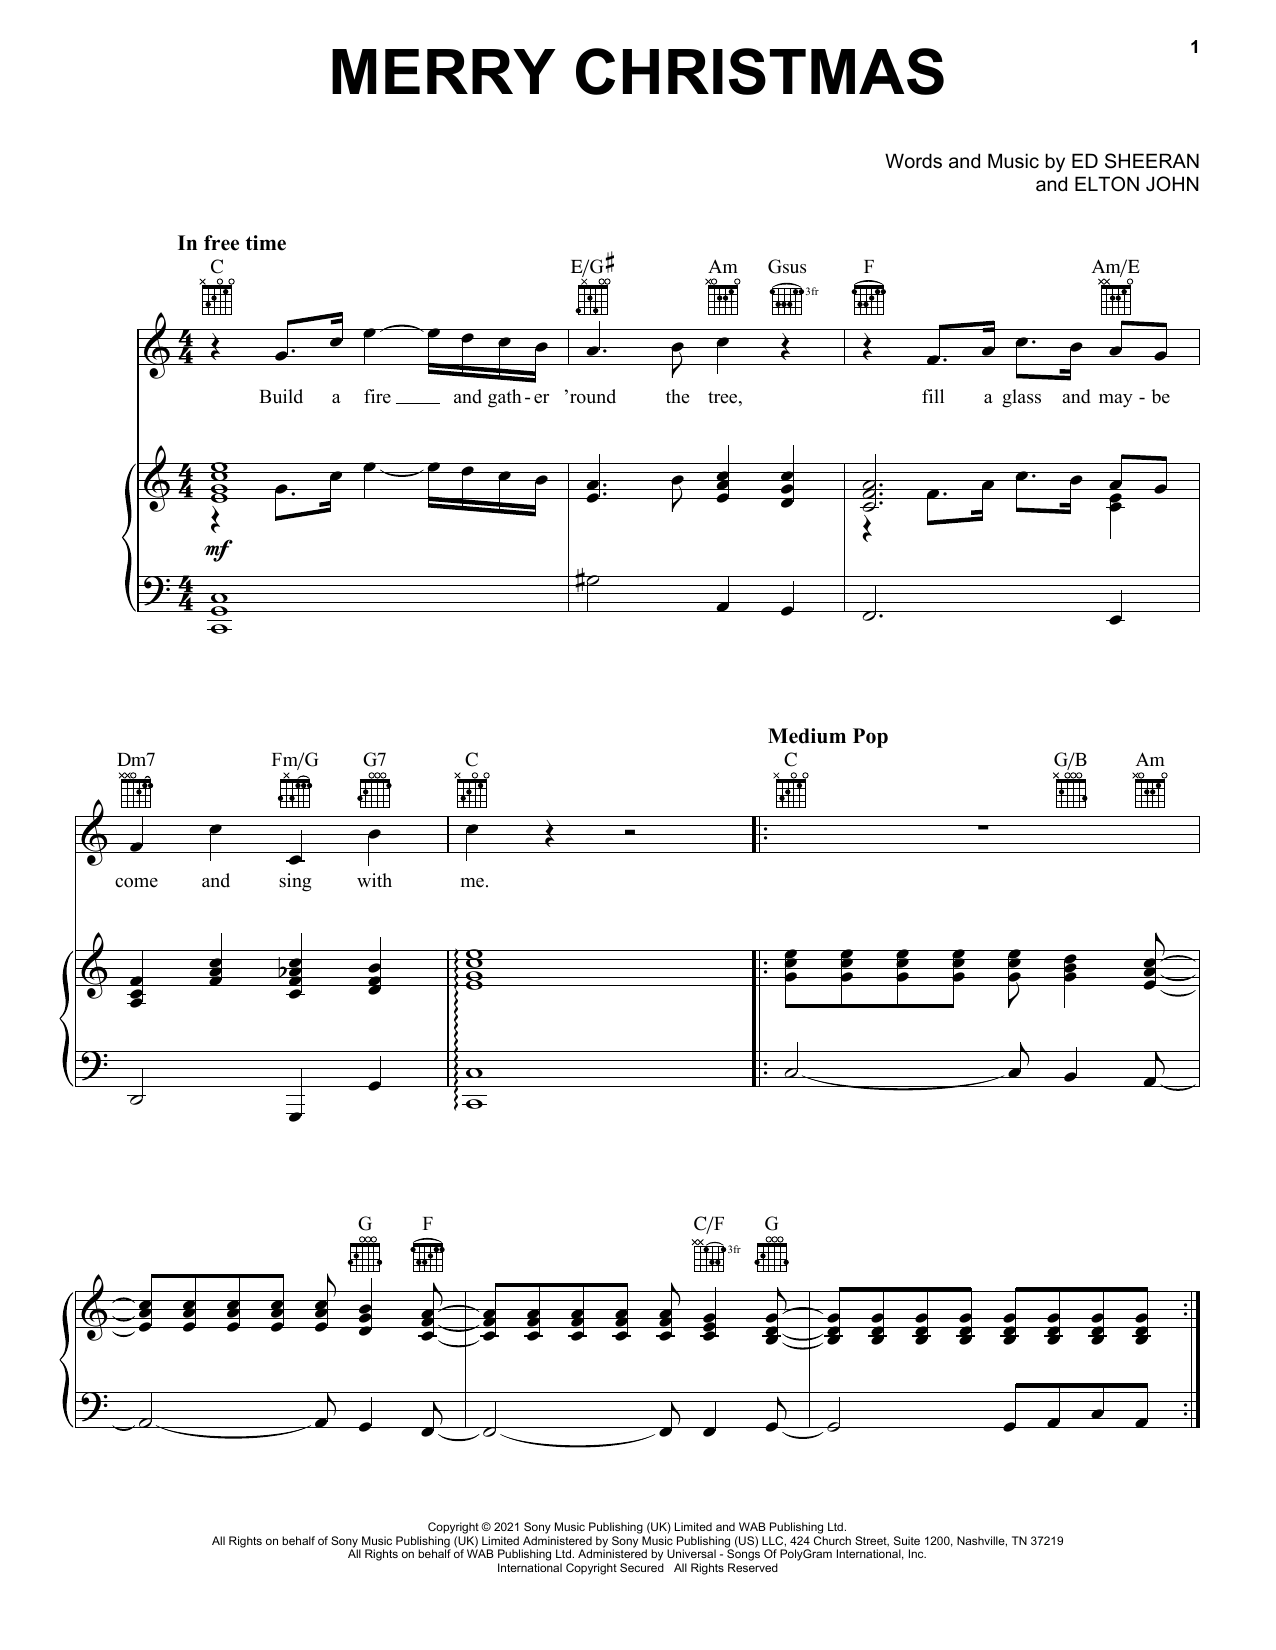 Ed Sheeran & Elton John Merry Christmas Sheet Music Notes & Chords for Easy Piano - Download or Print PDF